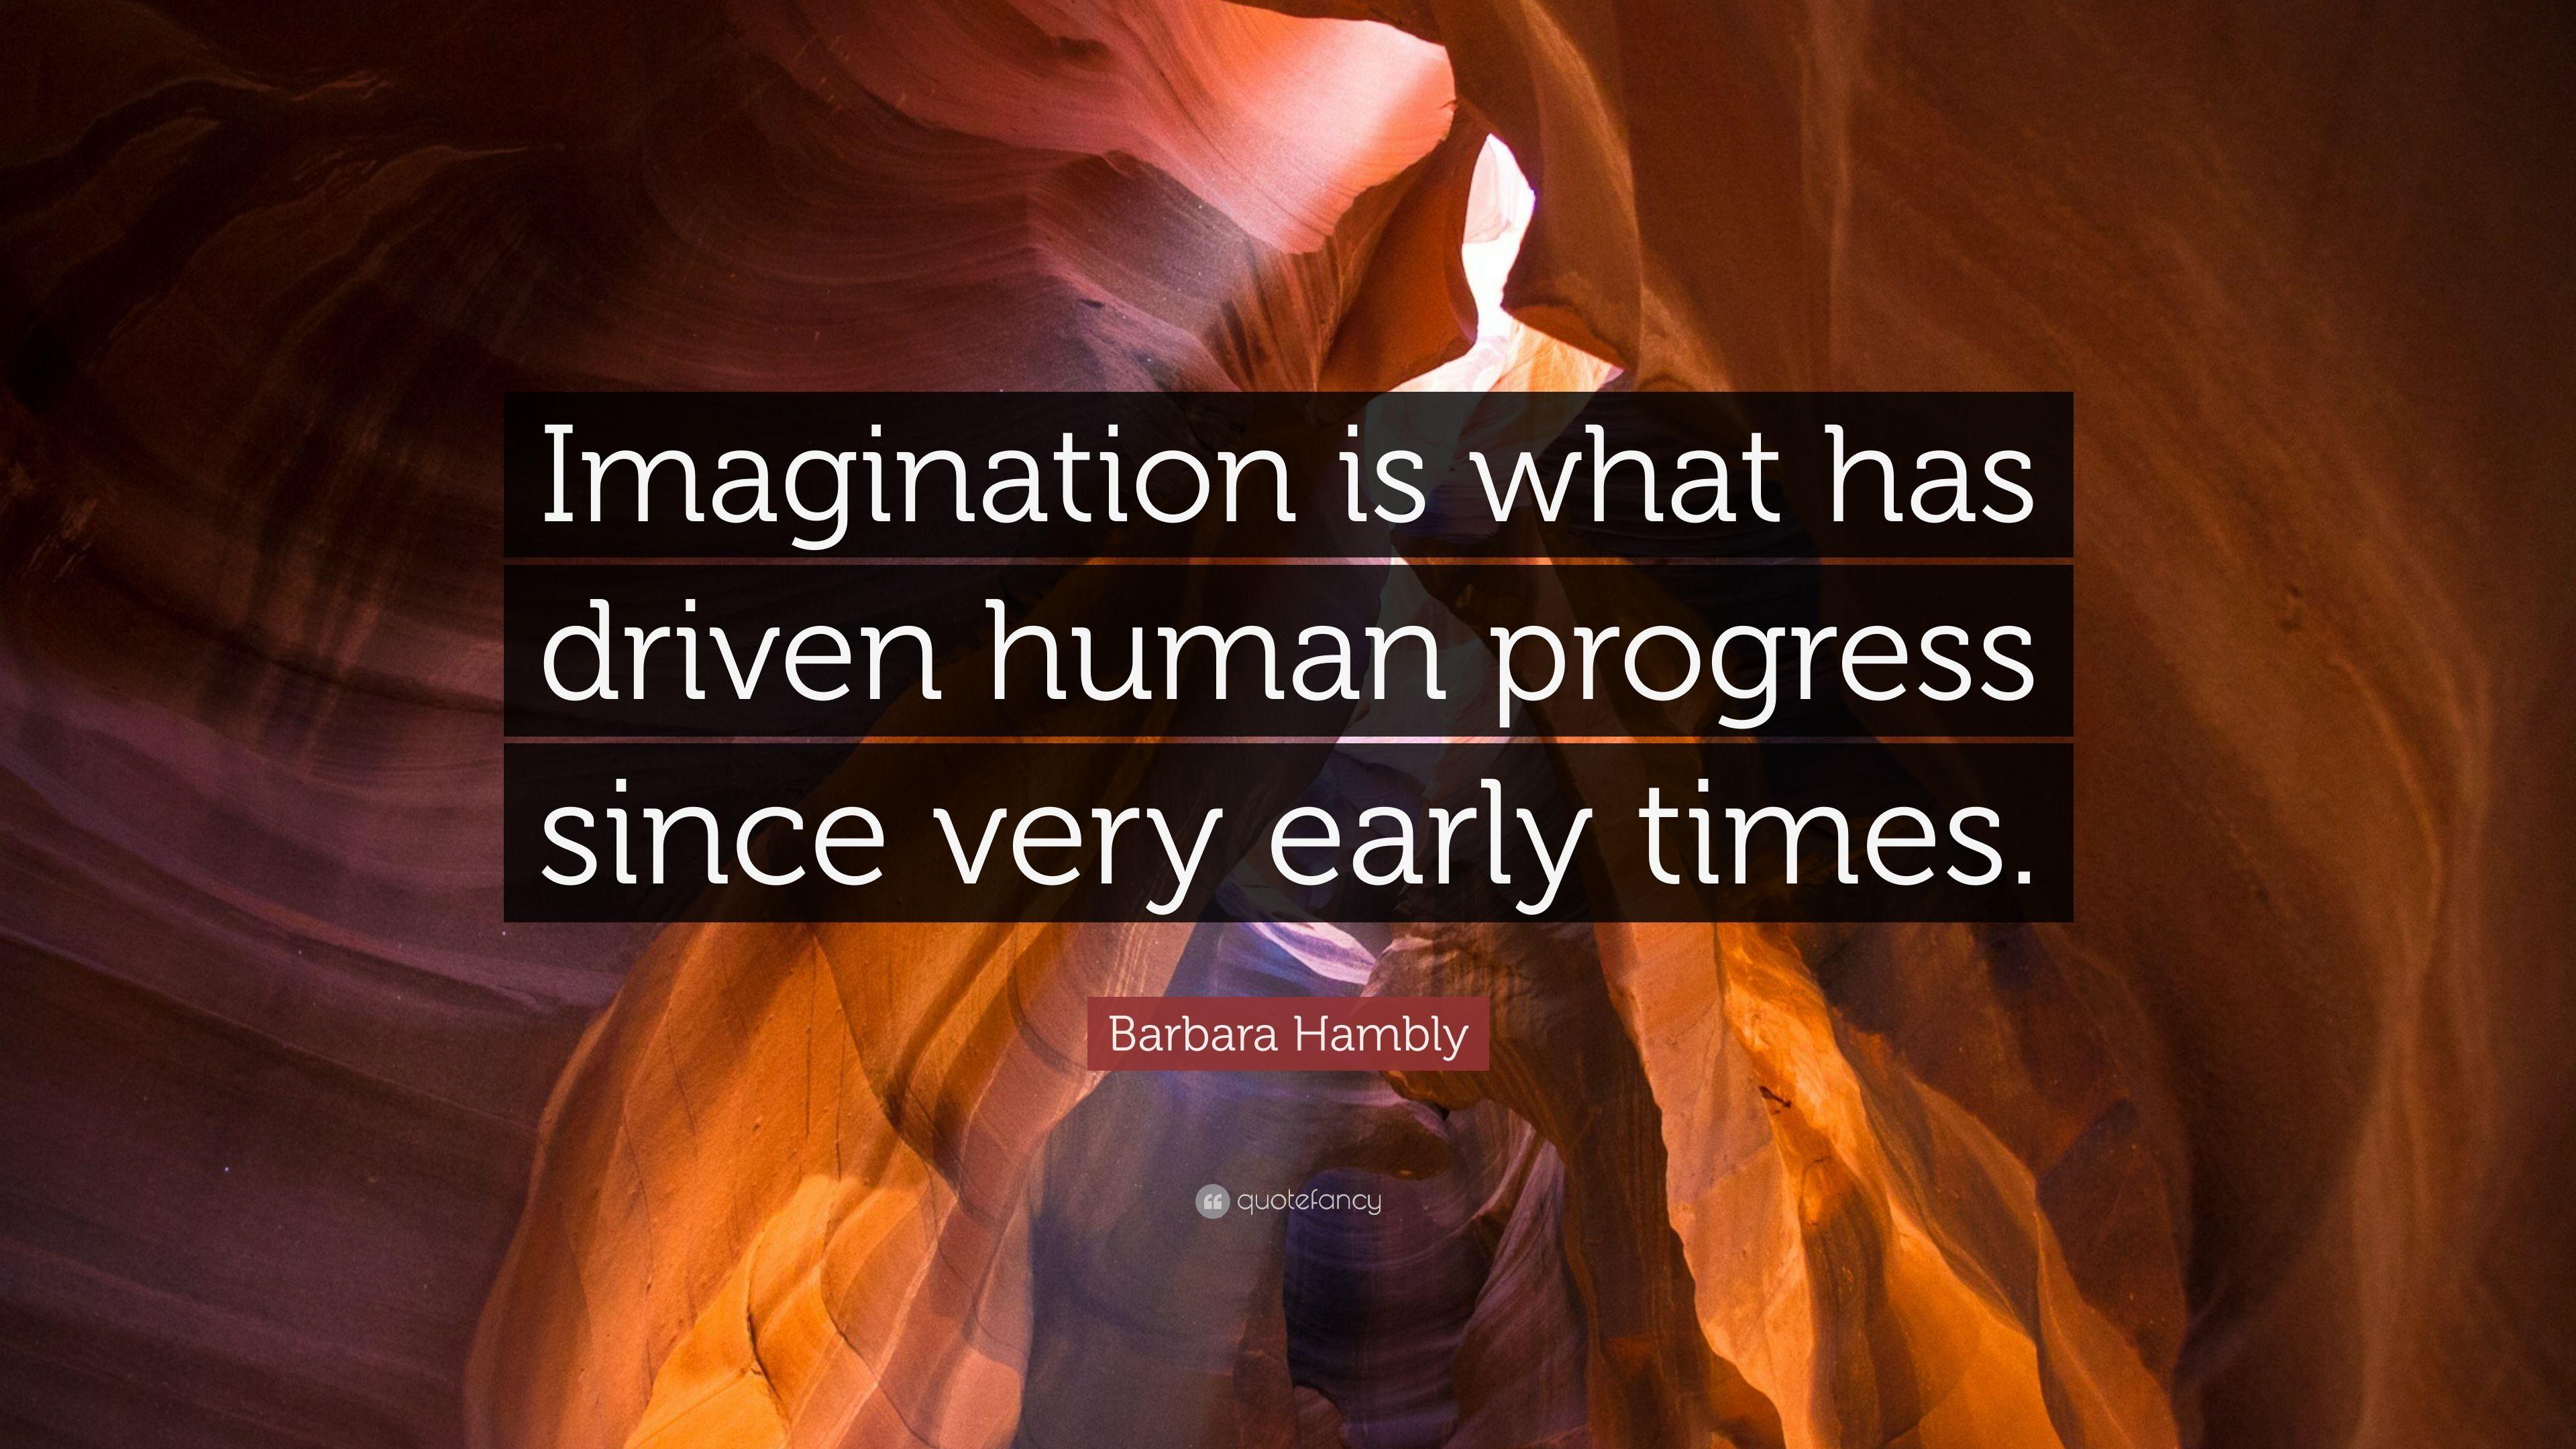 Barbara Hambly Quote: “Imagination is what has driven human progress